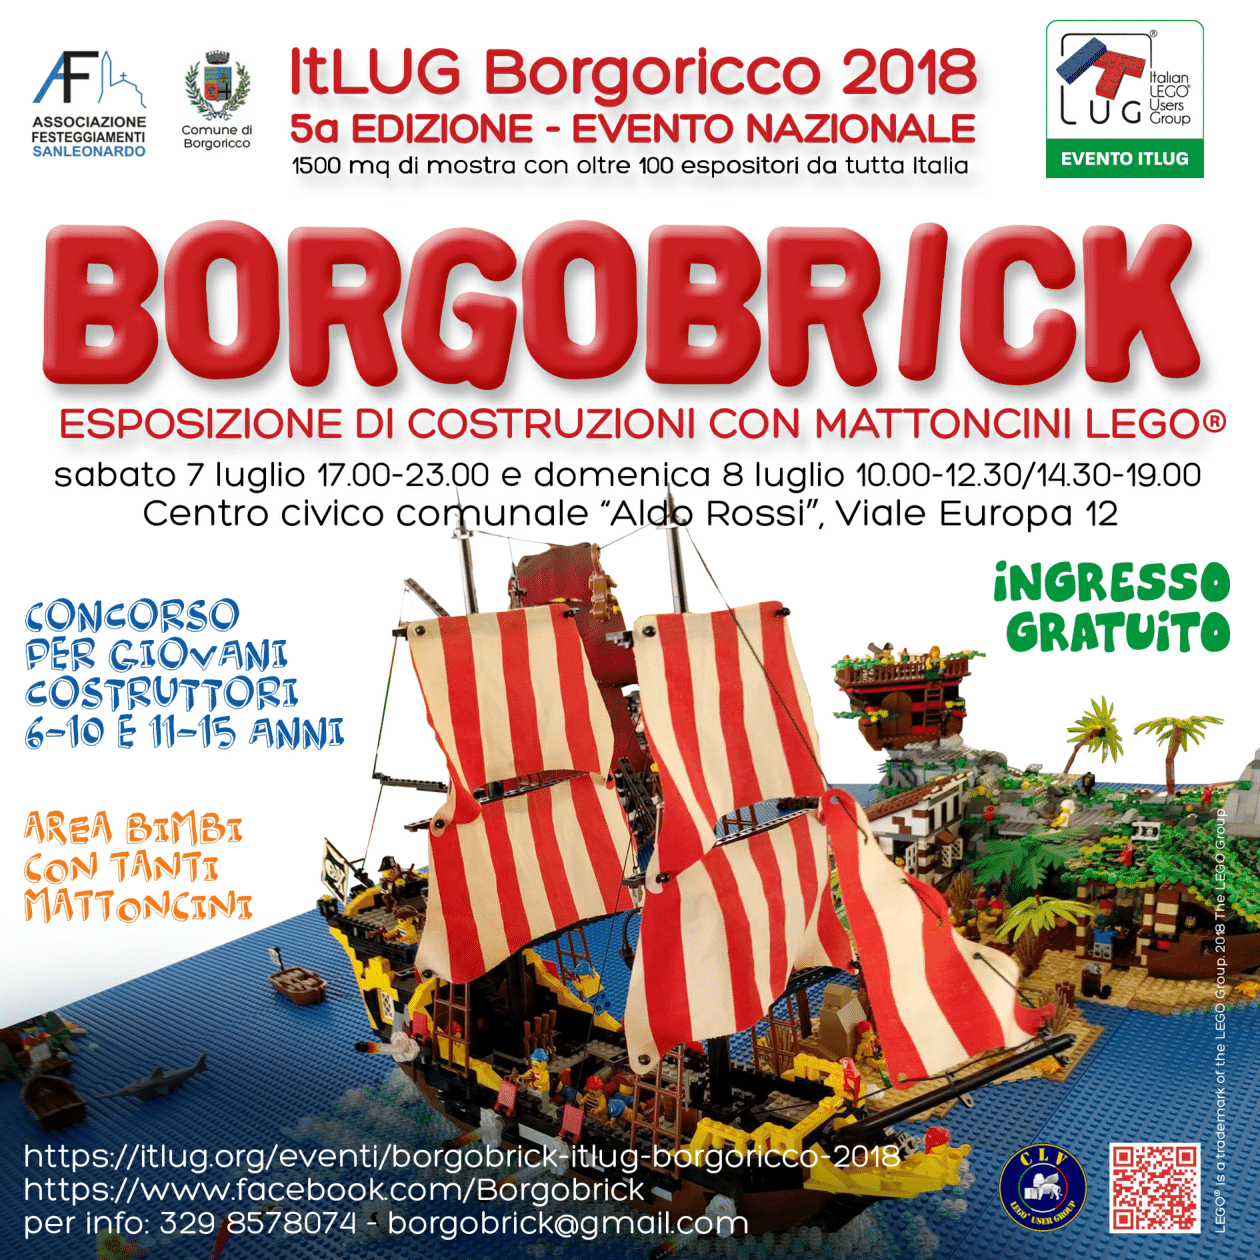 BorgoBrick - ItLUG Borgoricco 2018